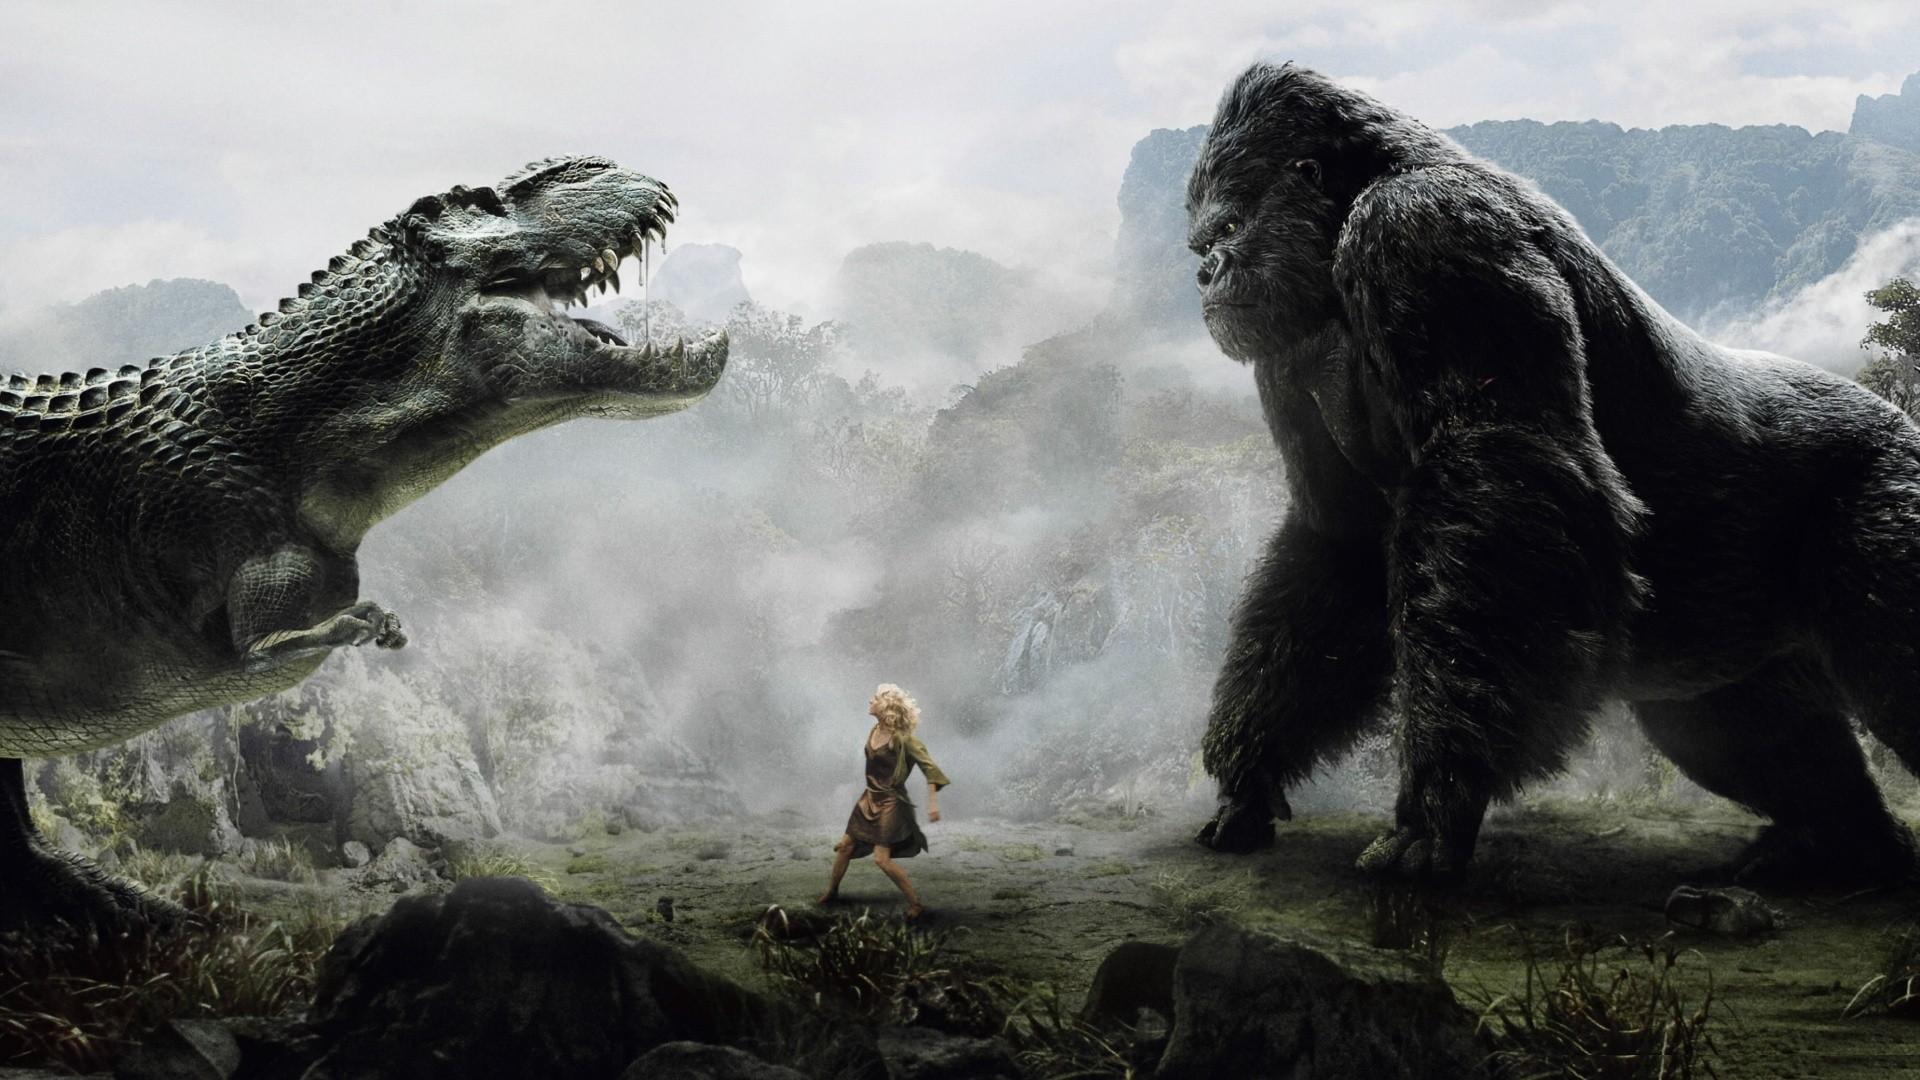 Godzilla Vs King Kong HD Wallpaper Cool Image 4k High Definition